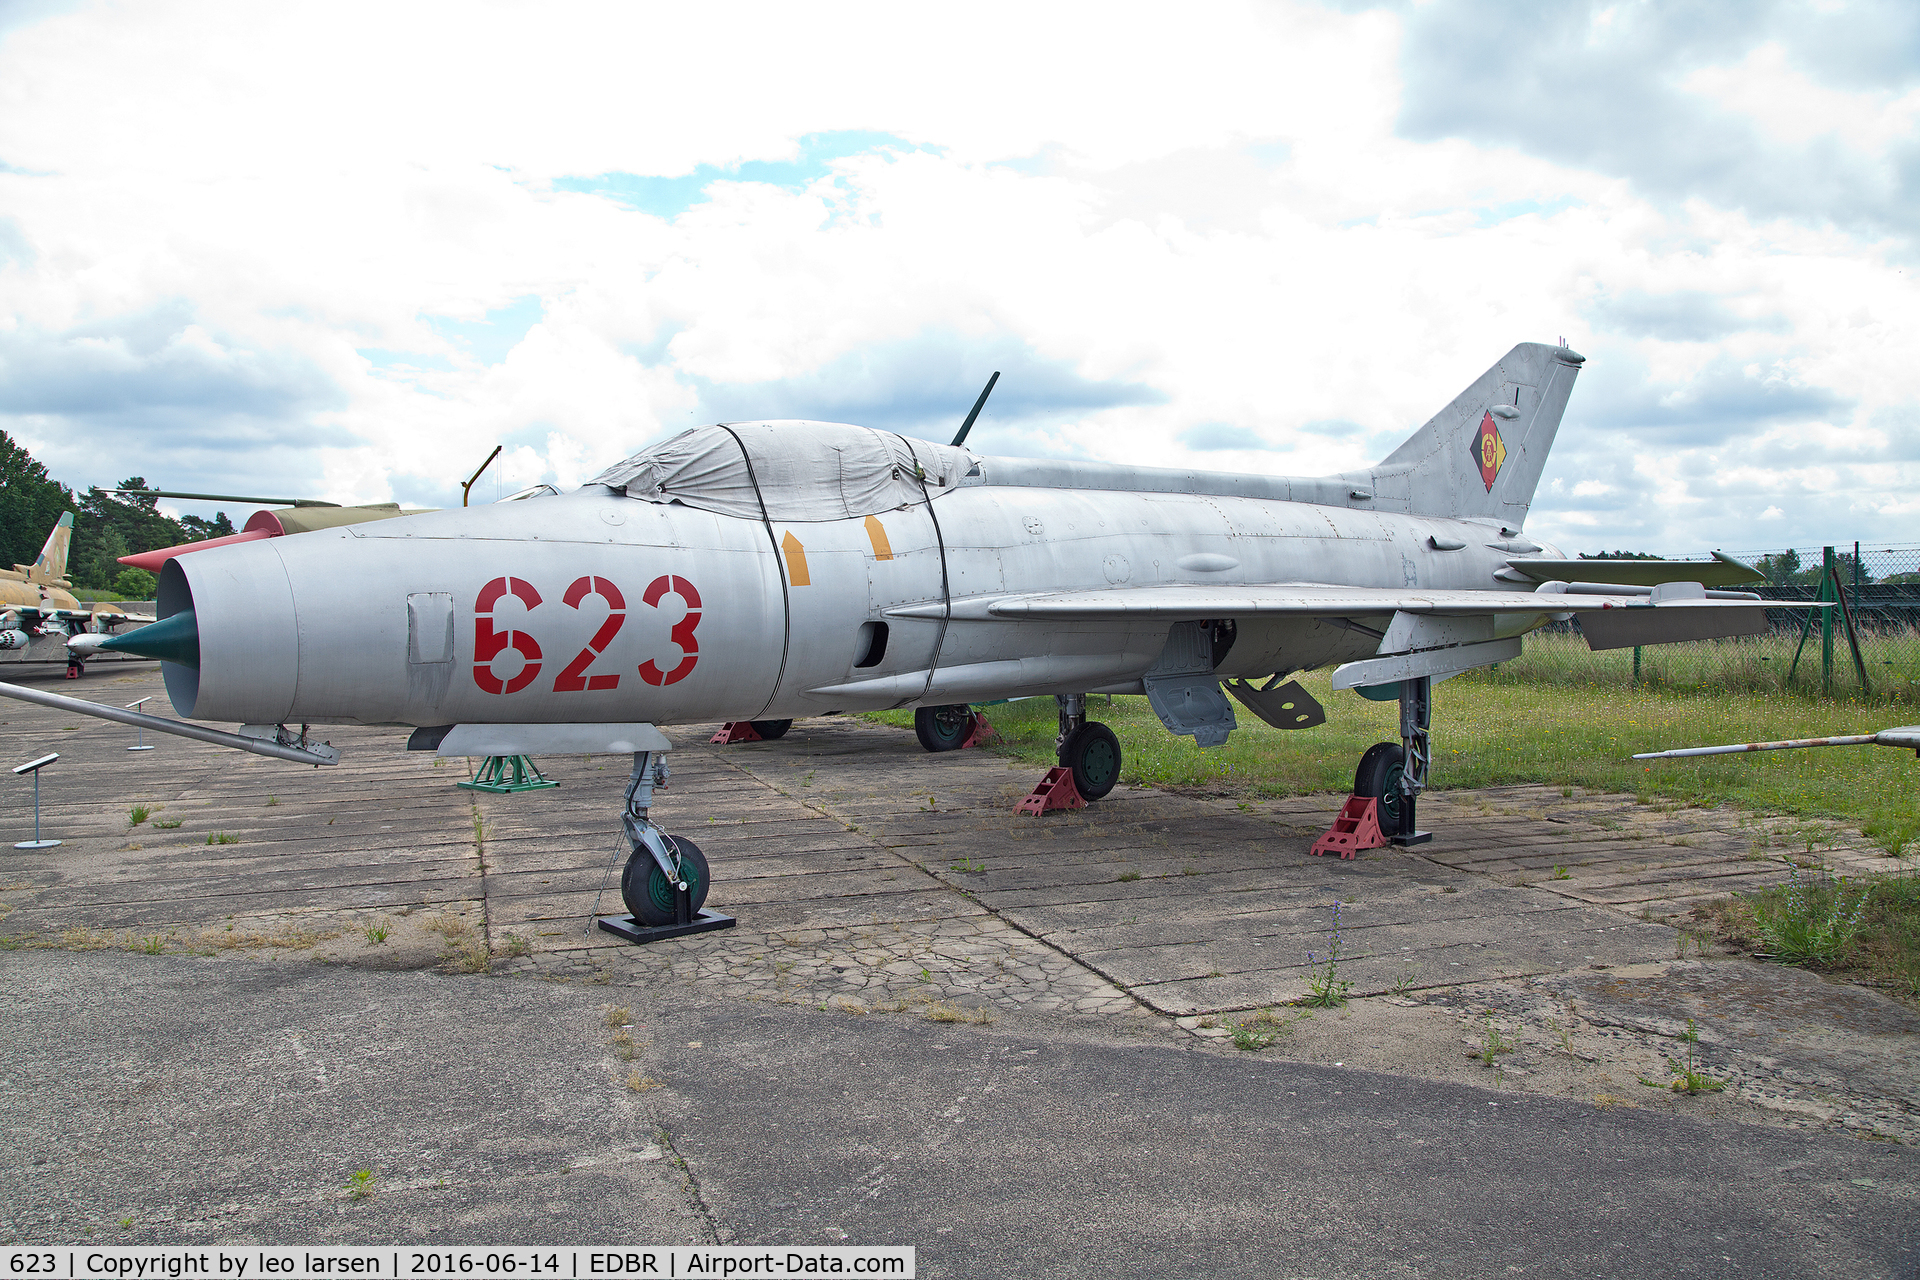 623, 1962 Mikoyan-Gurevich MIG-21F-13 C/N 74 1916, Rothenburg museum 14.6.2016